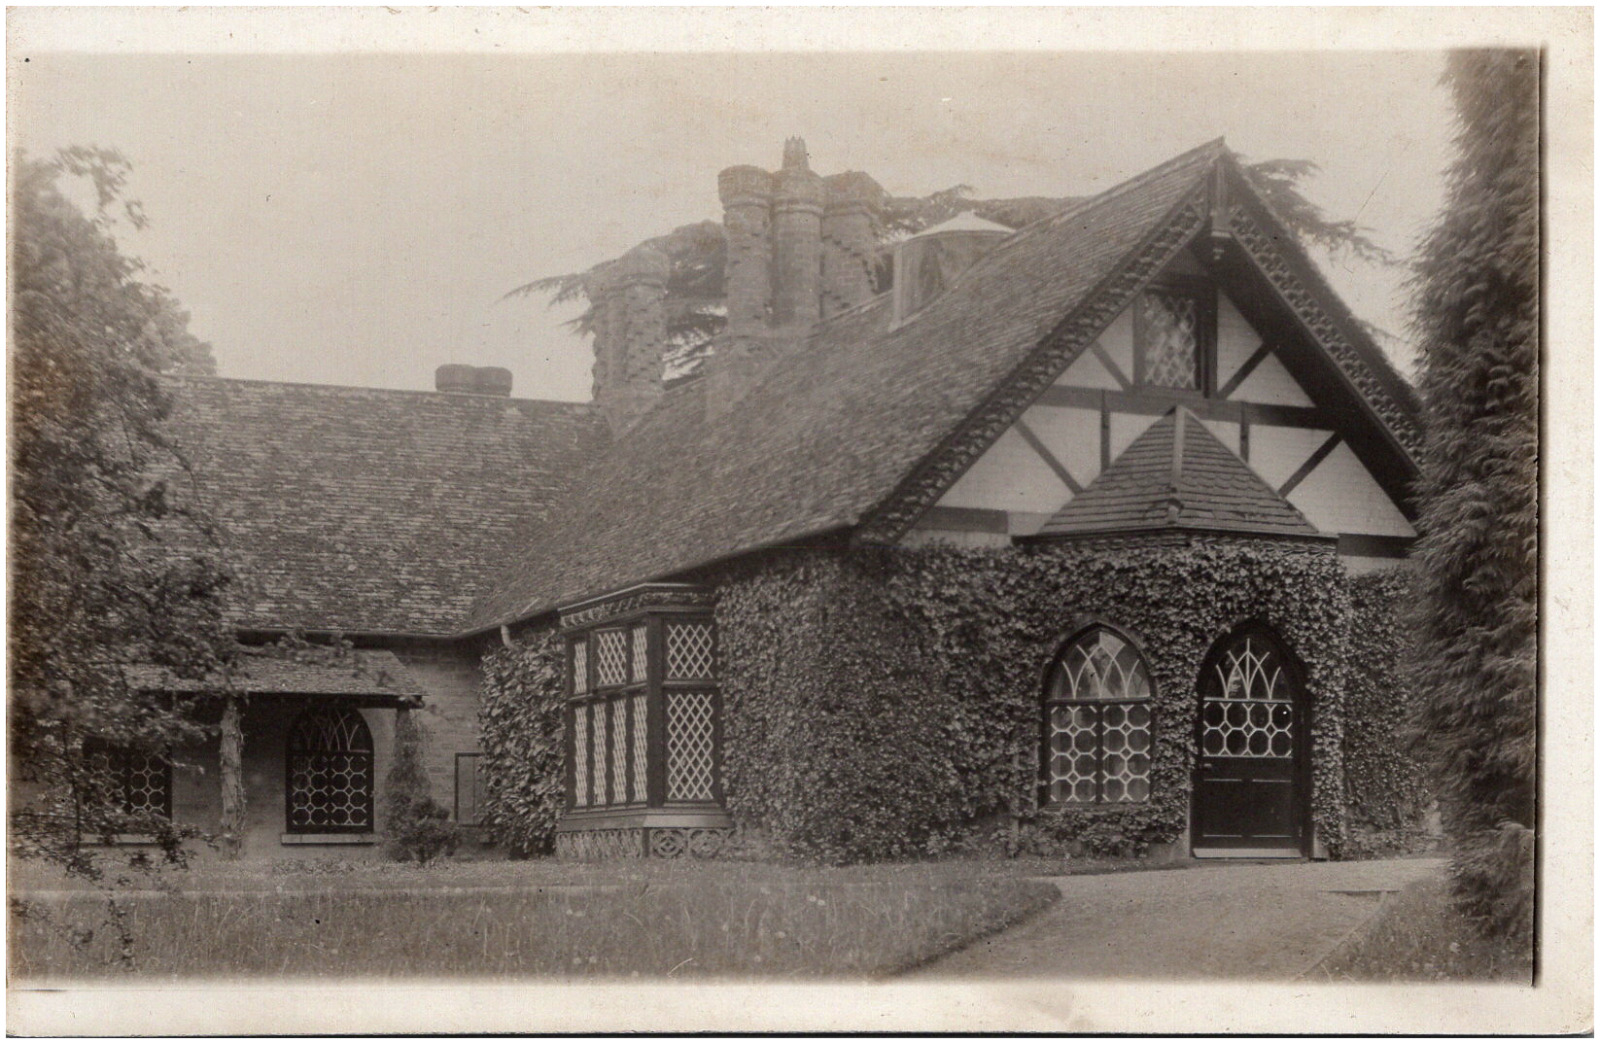 Shell Cottage Carton House Maynooth County Kildare Ireland 1910s RPPC Postcard